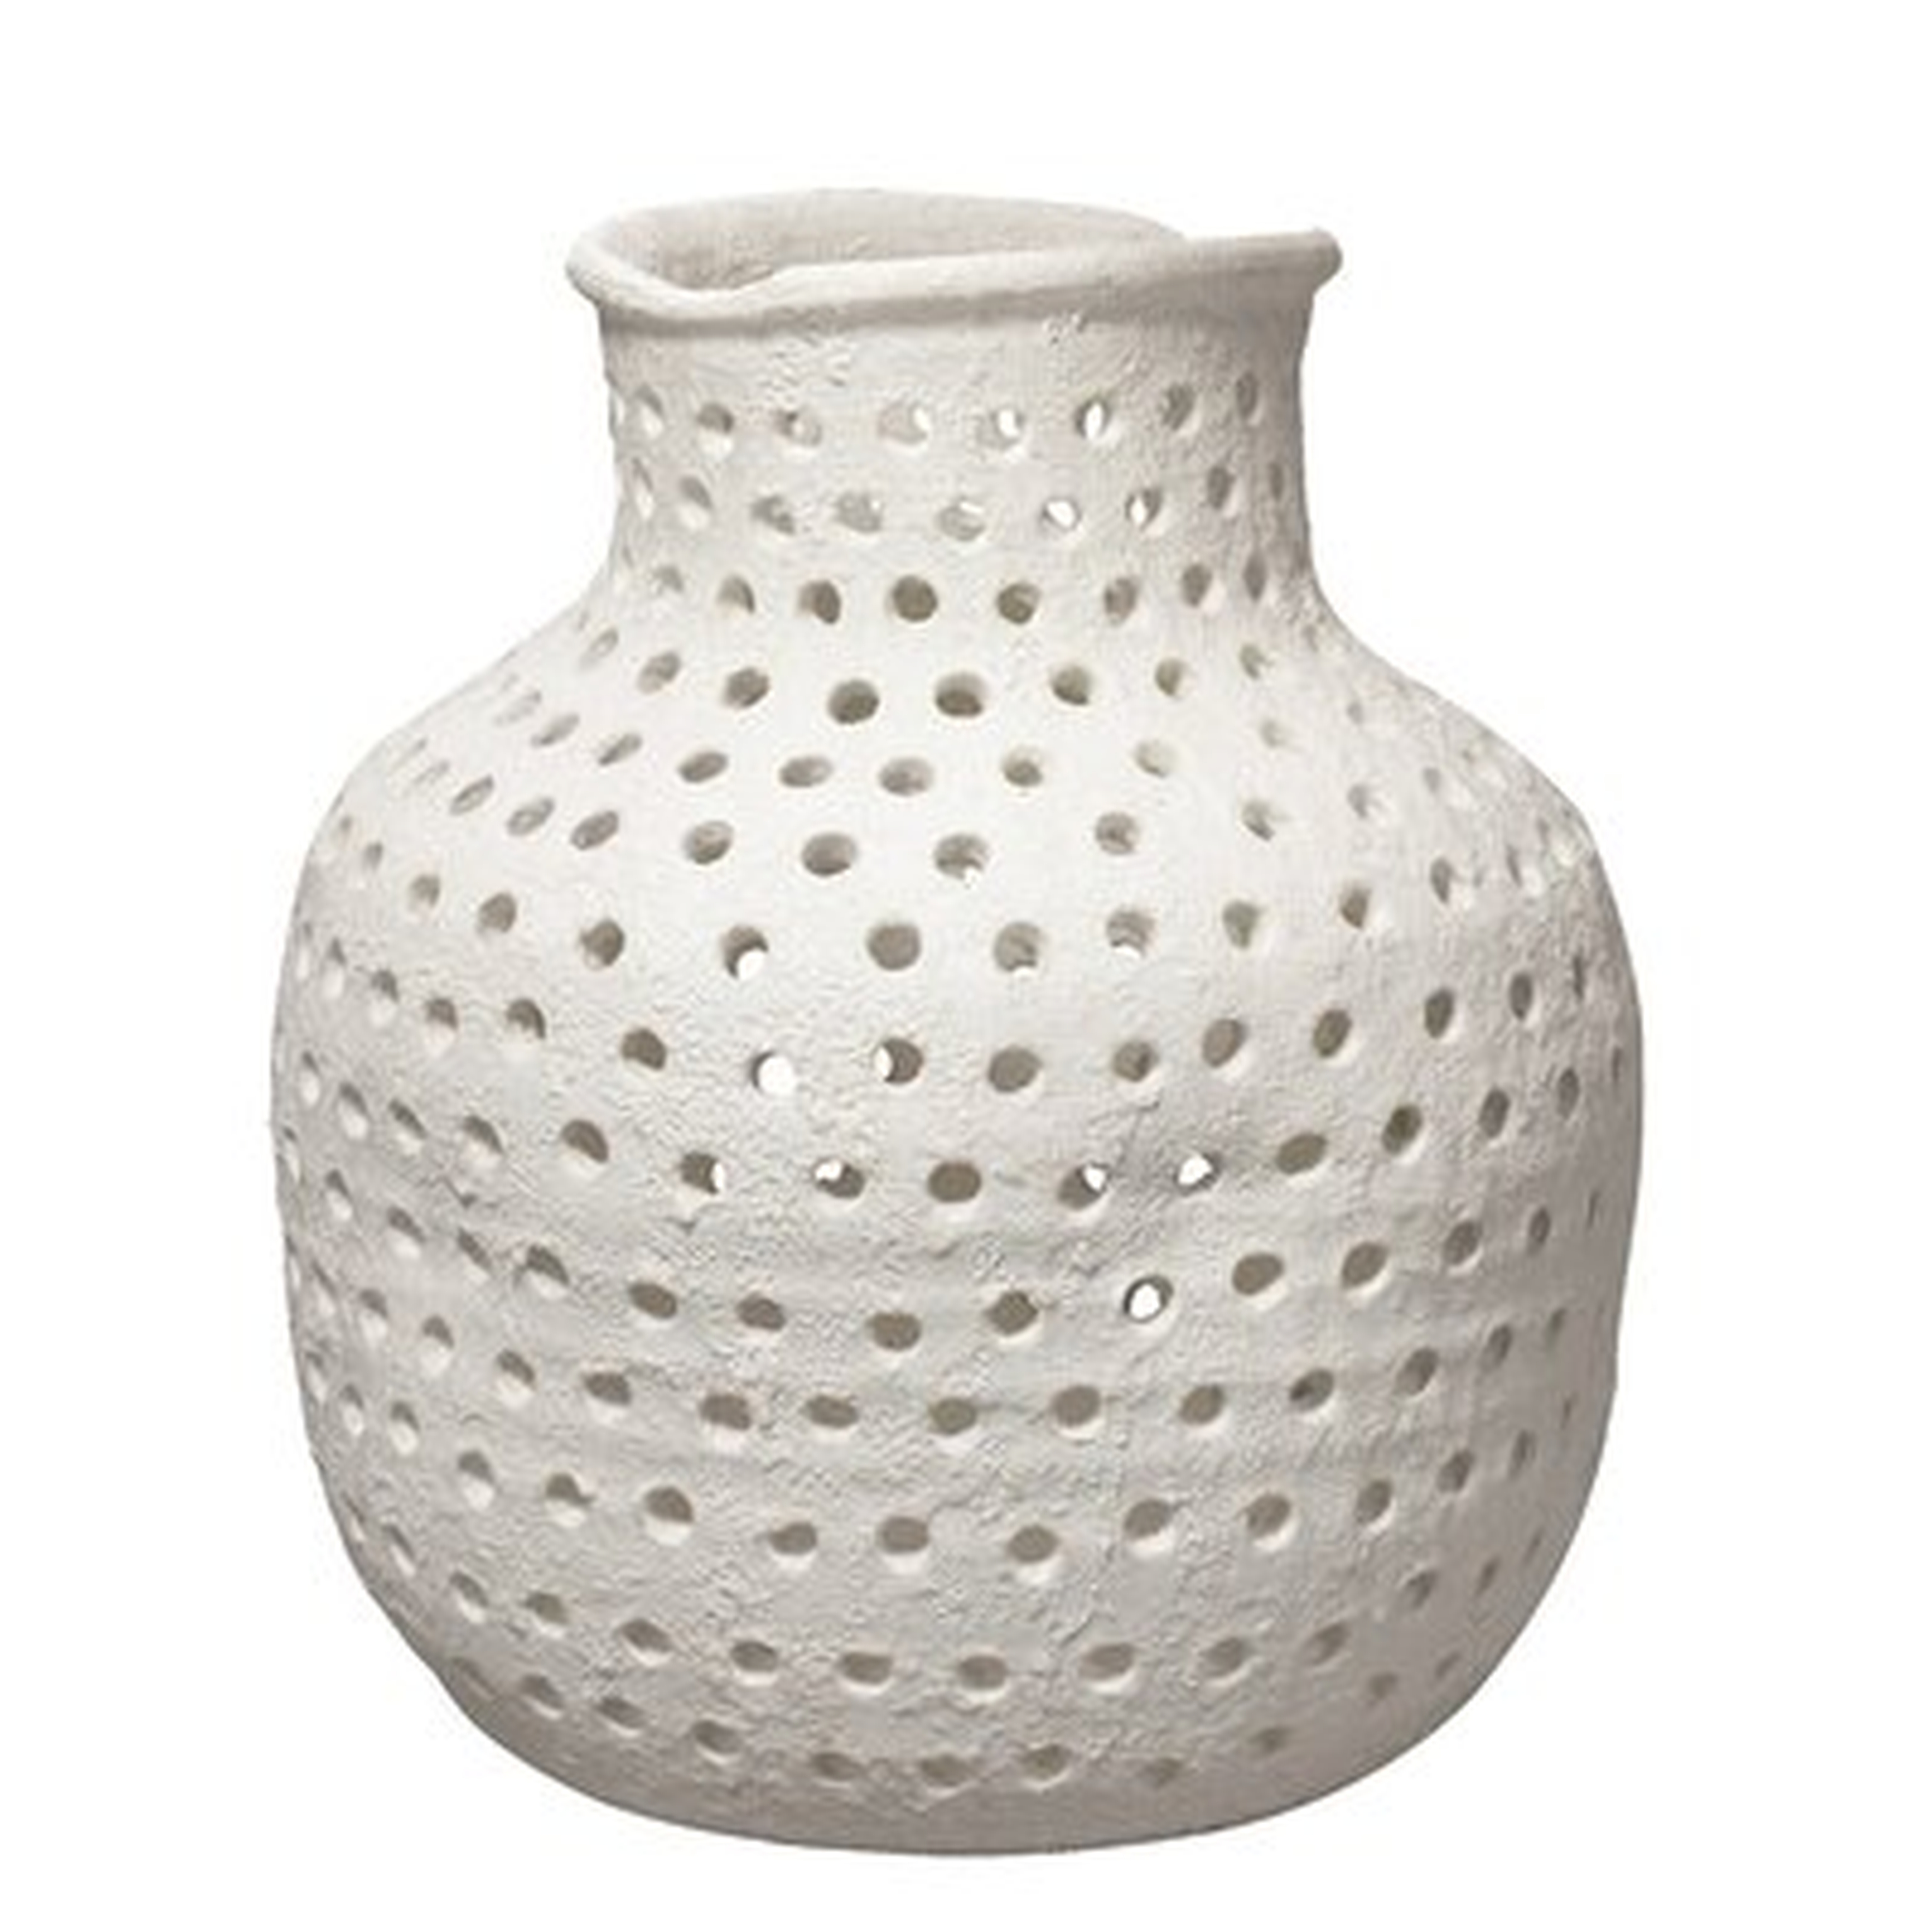 Demarest Porous White Ceramic Vase - Birch Lane